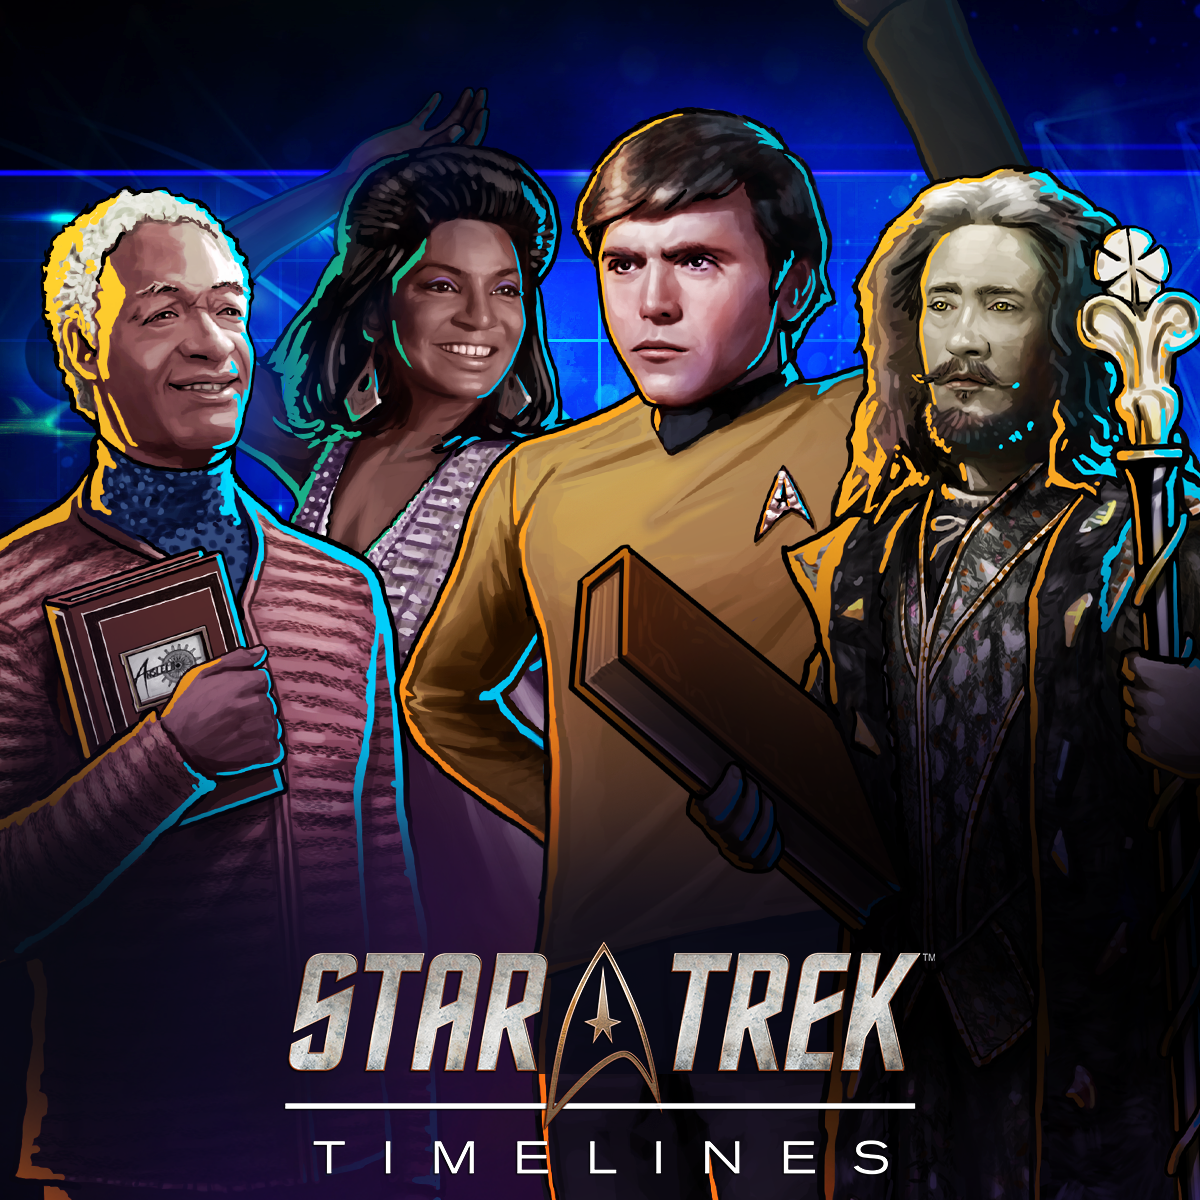 Star trek timelines ship crew